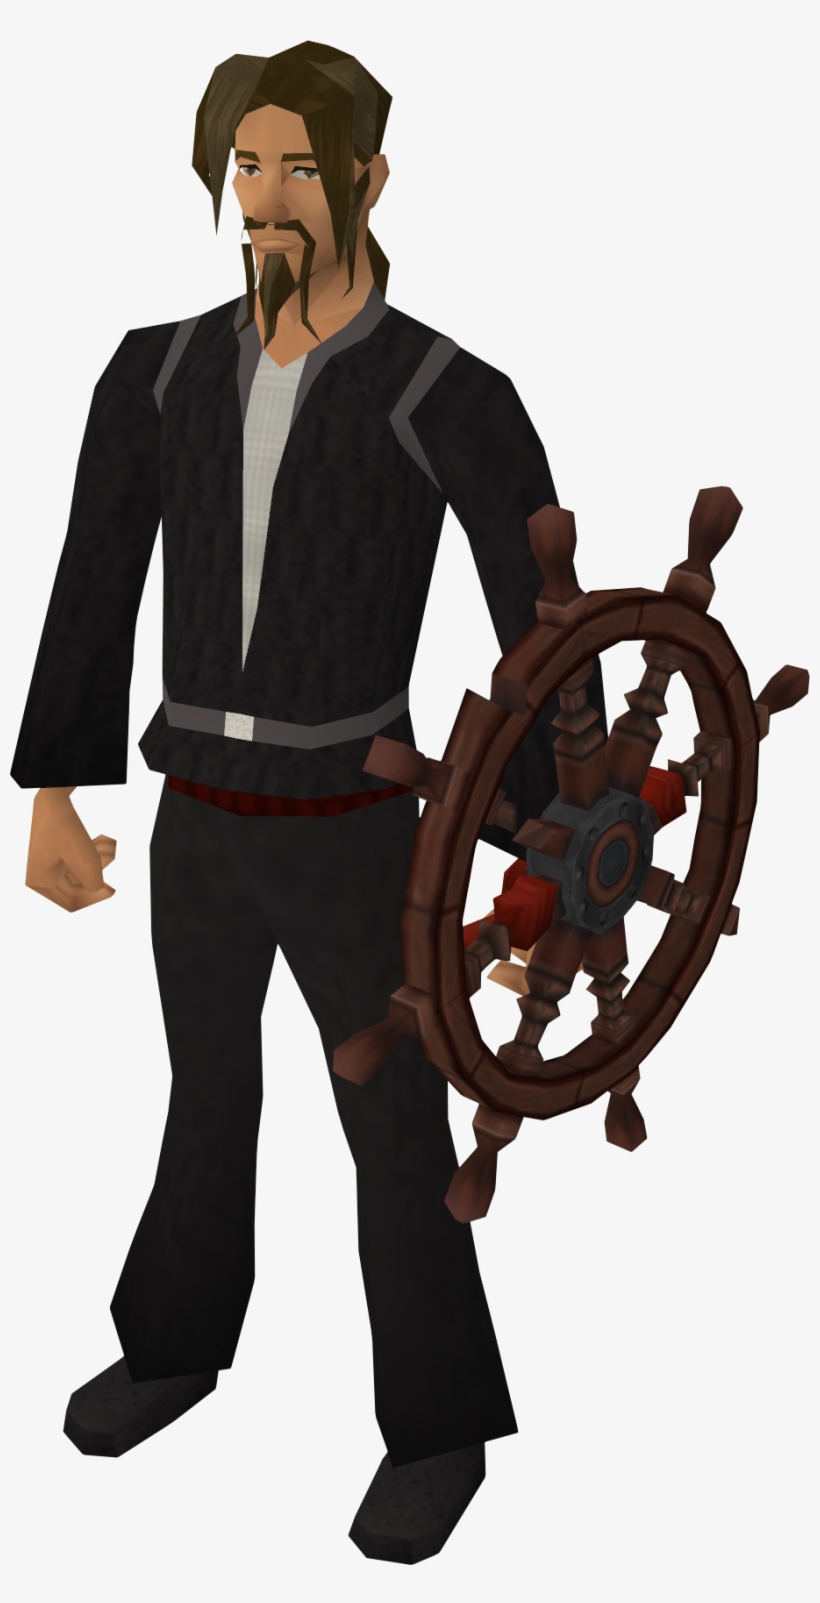 Ship's Wheel Shield - Cartoon, transparent png #8740660